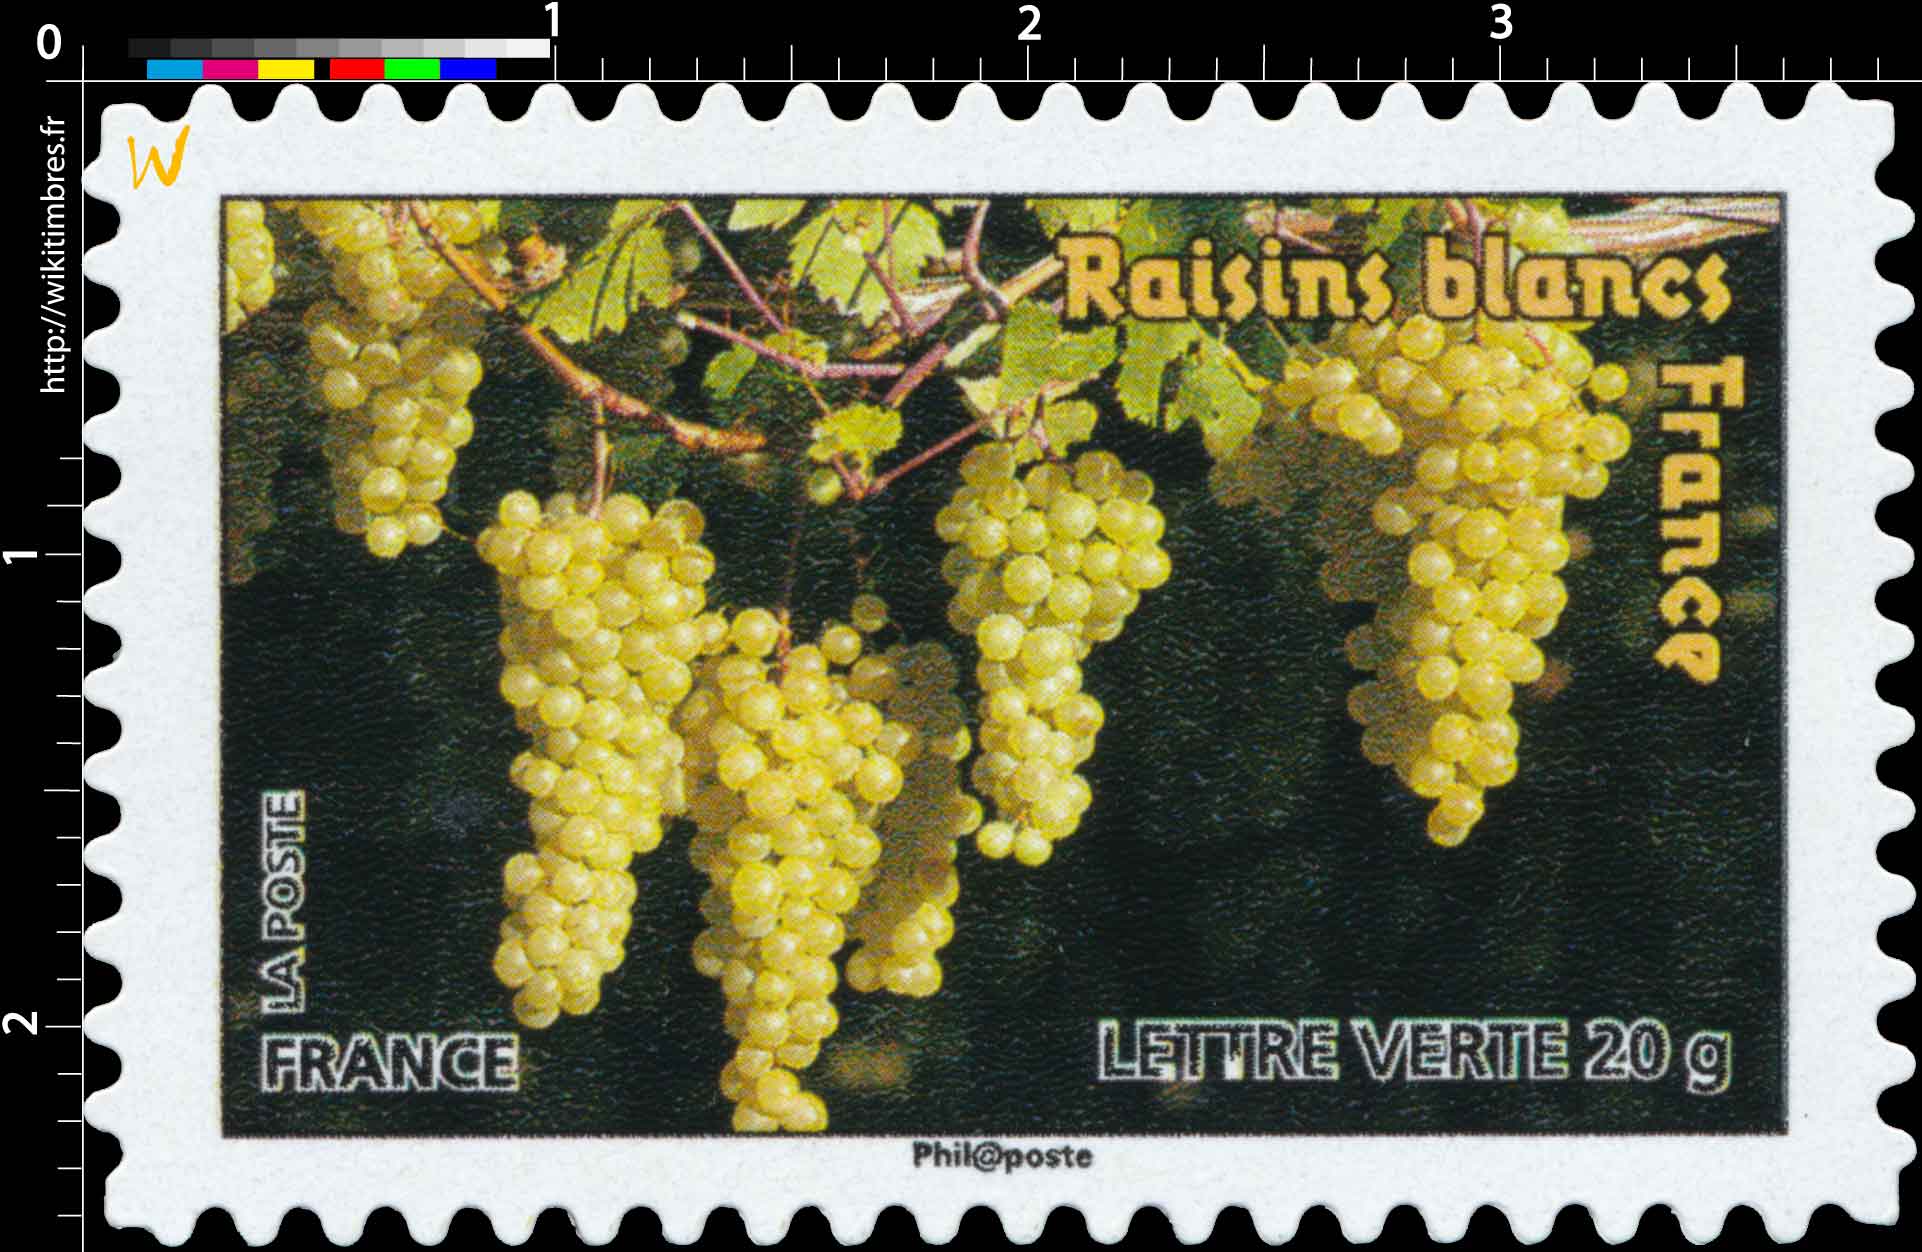 raisins blancs France